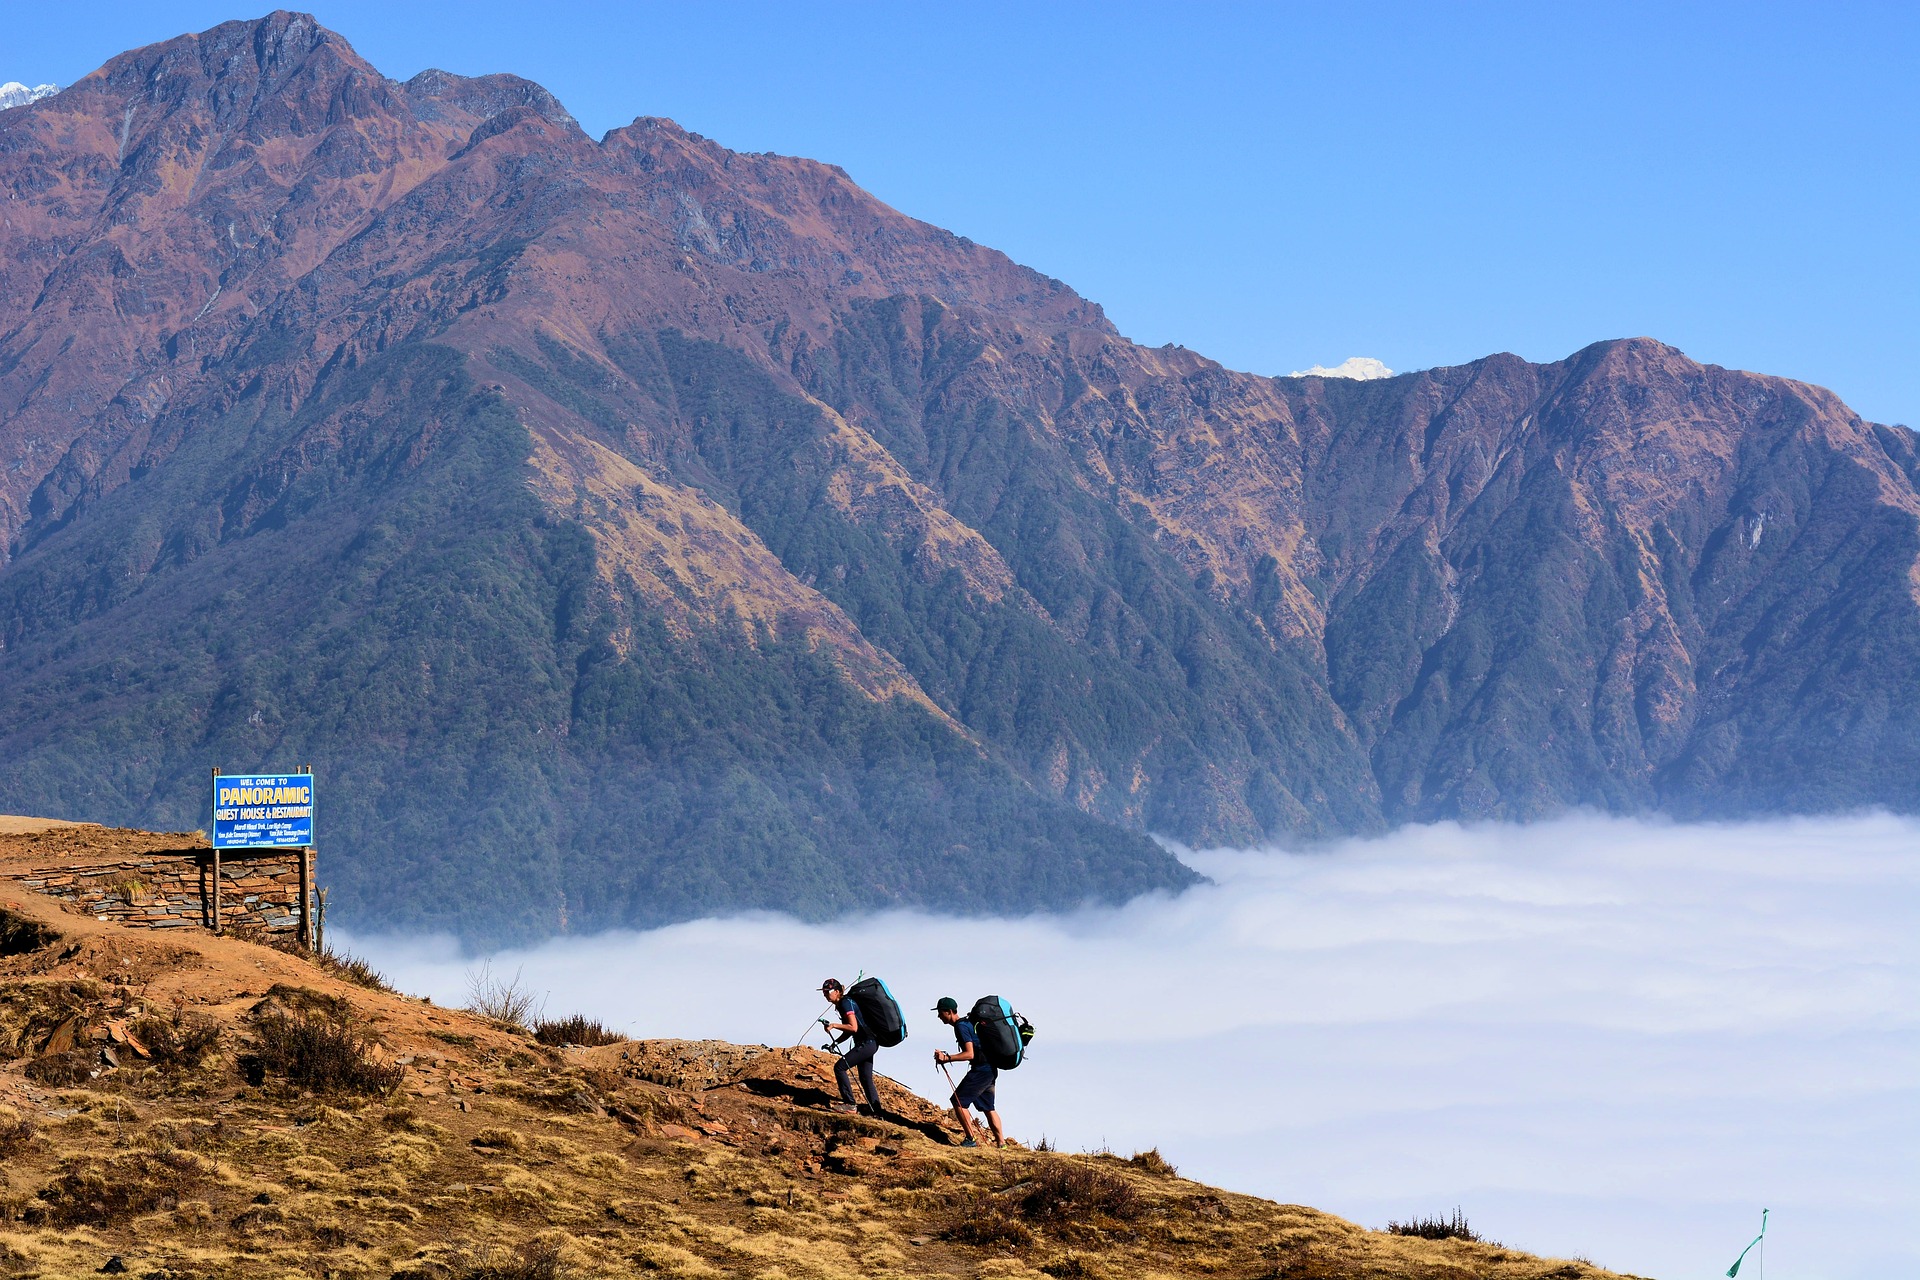 Cost to trek around Annapurna Region